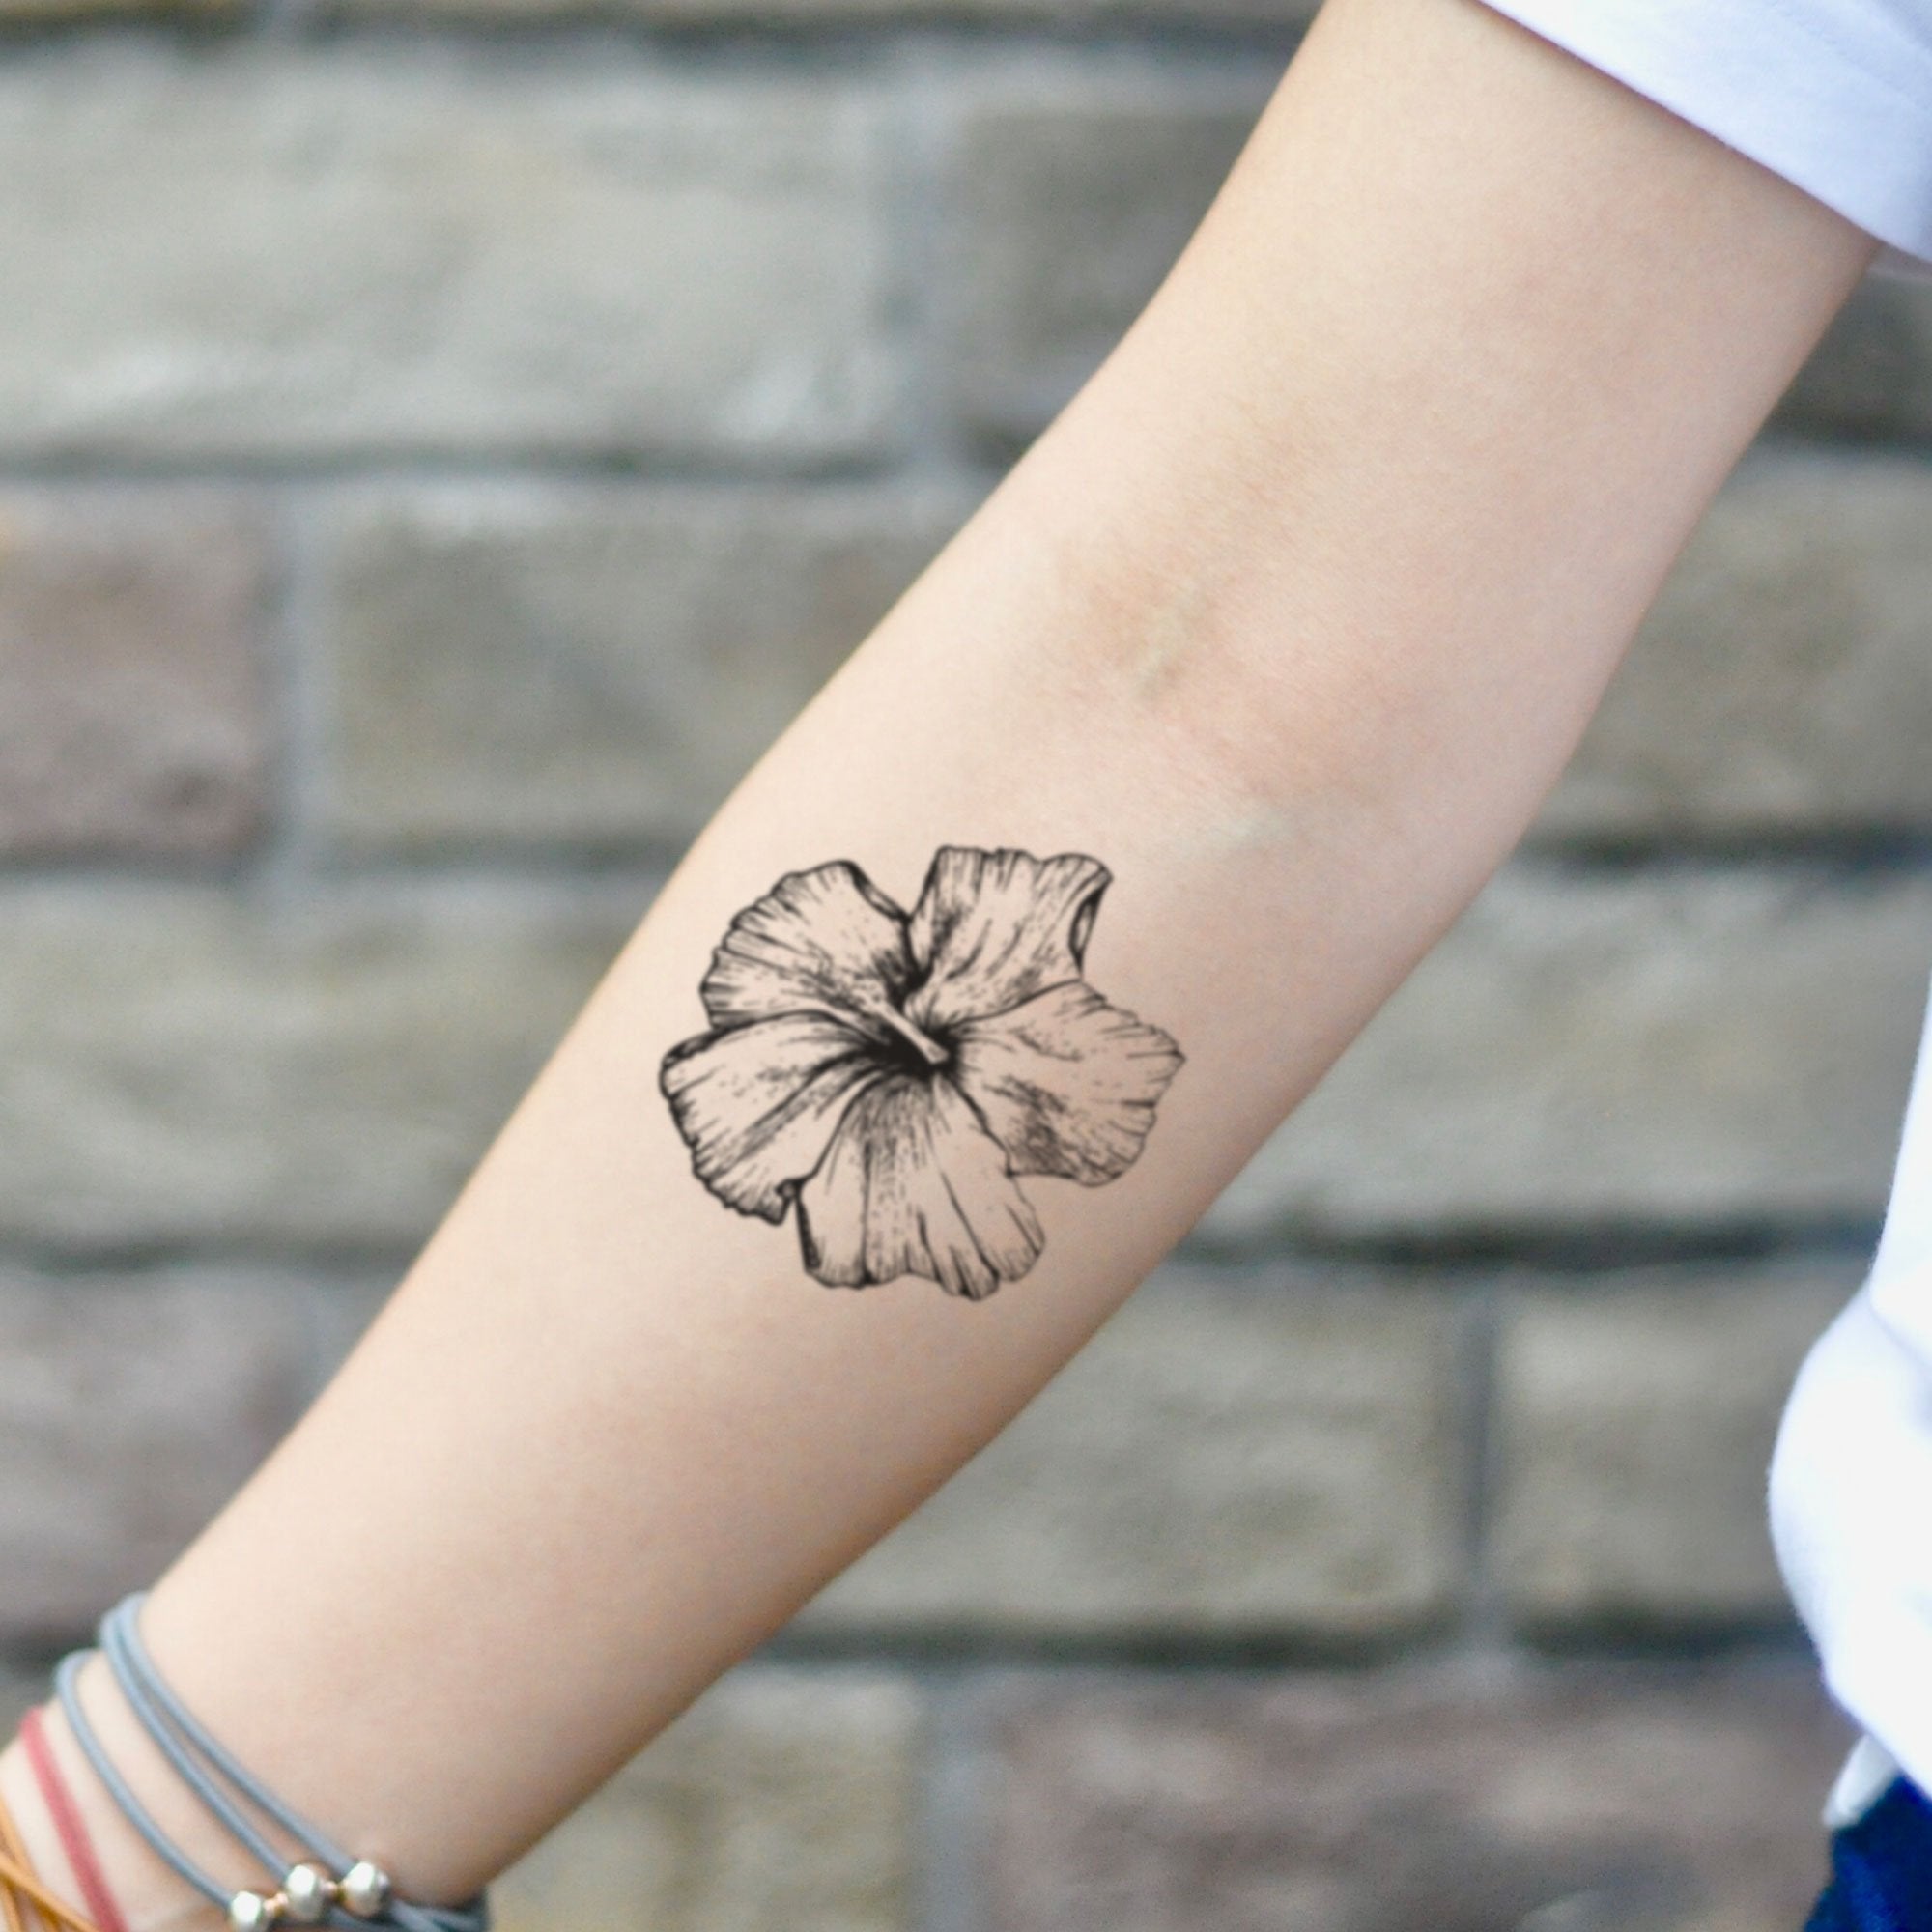 Hibiscus Flower Tattoo On Left Shoulder